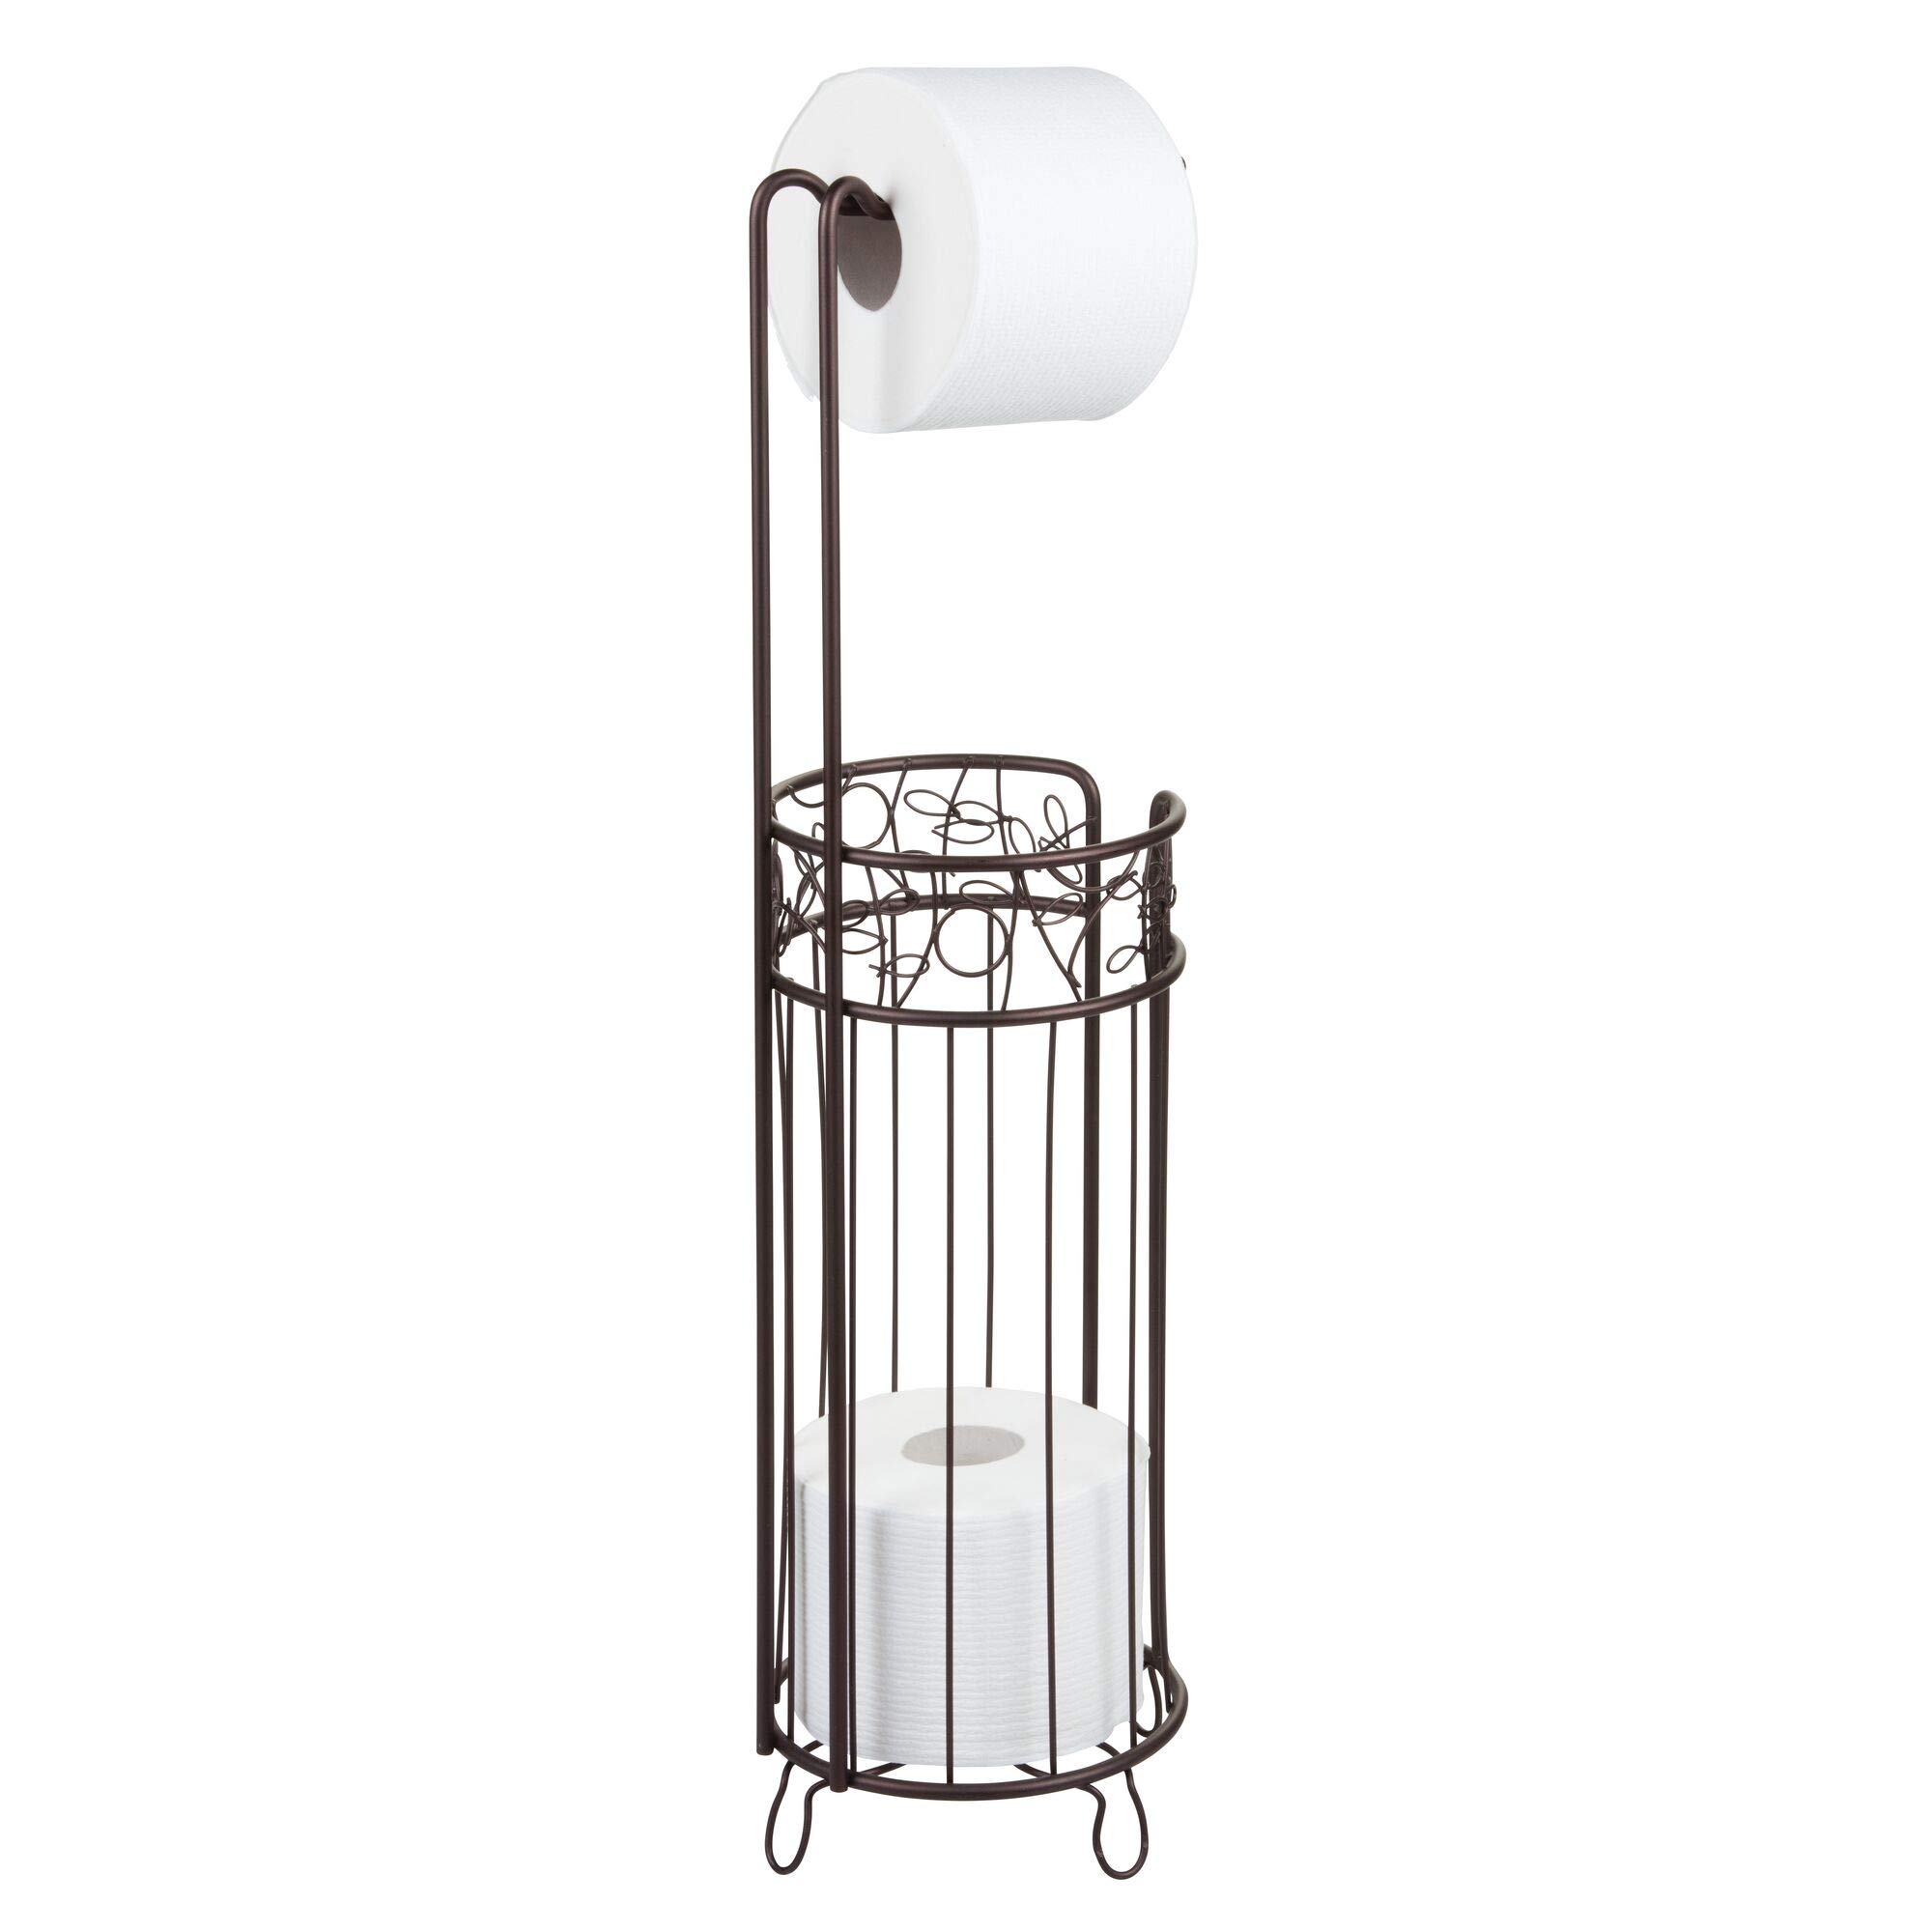 iDesign Twigz Steel Free-Standing Toilet Paper Storage Dispenser